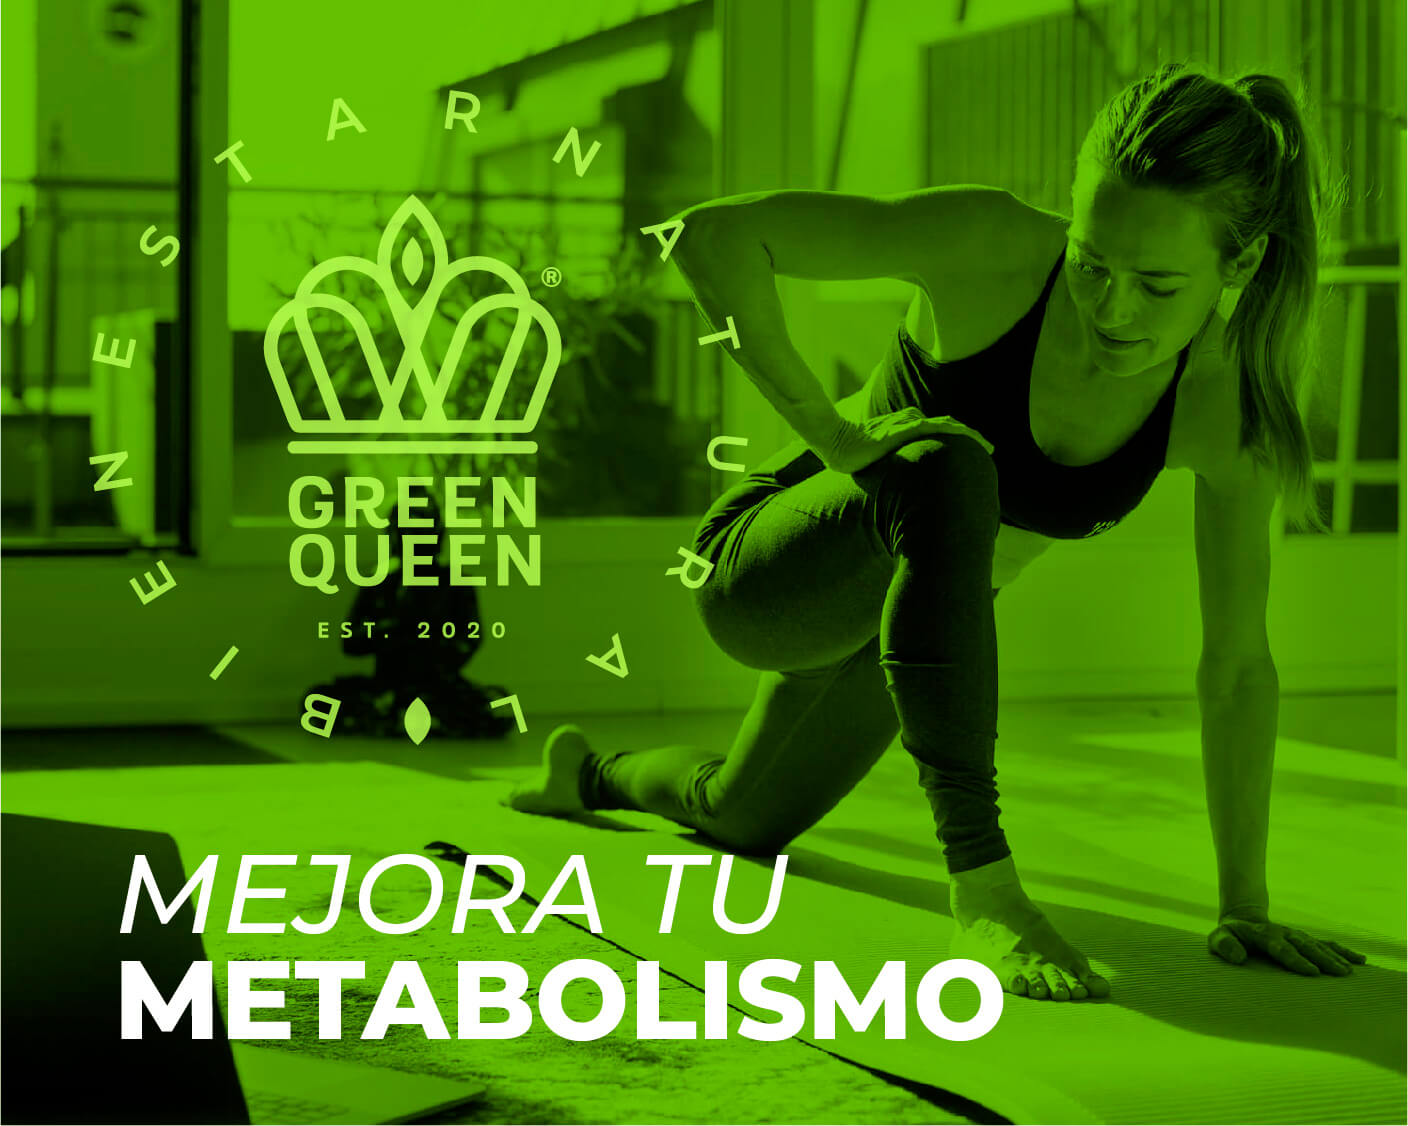 Mejora tu metabolismo - Green Queen México